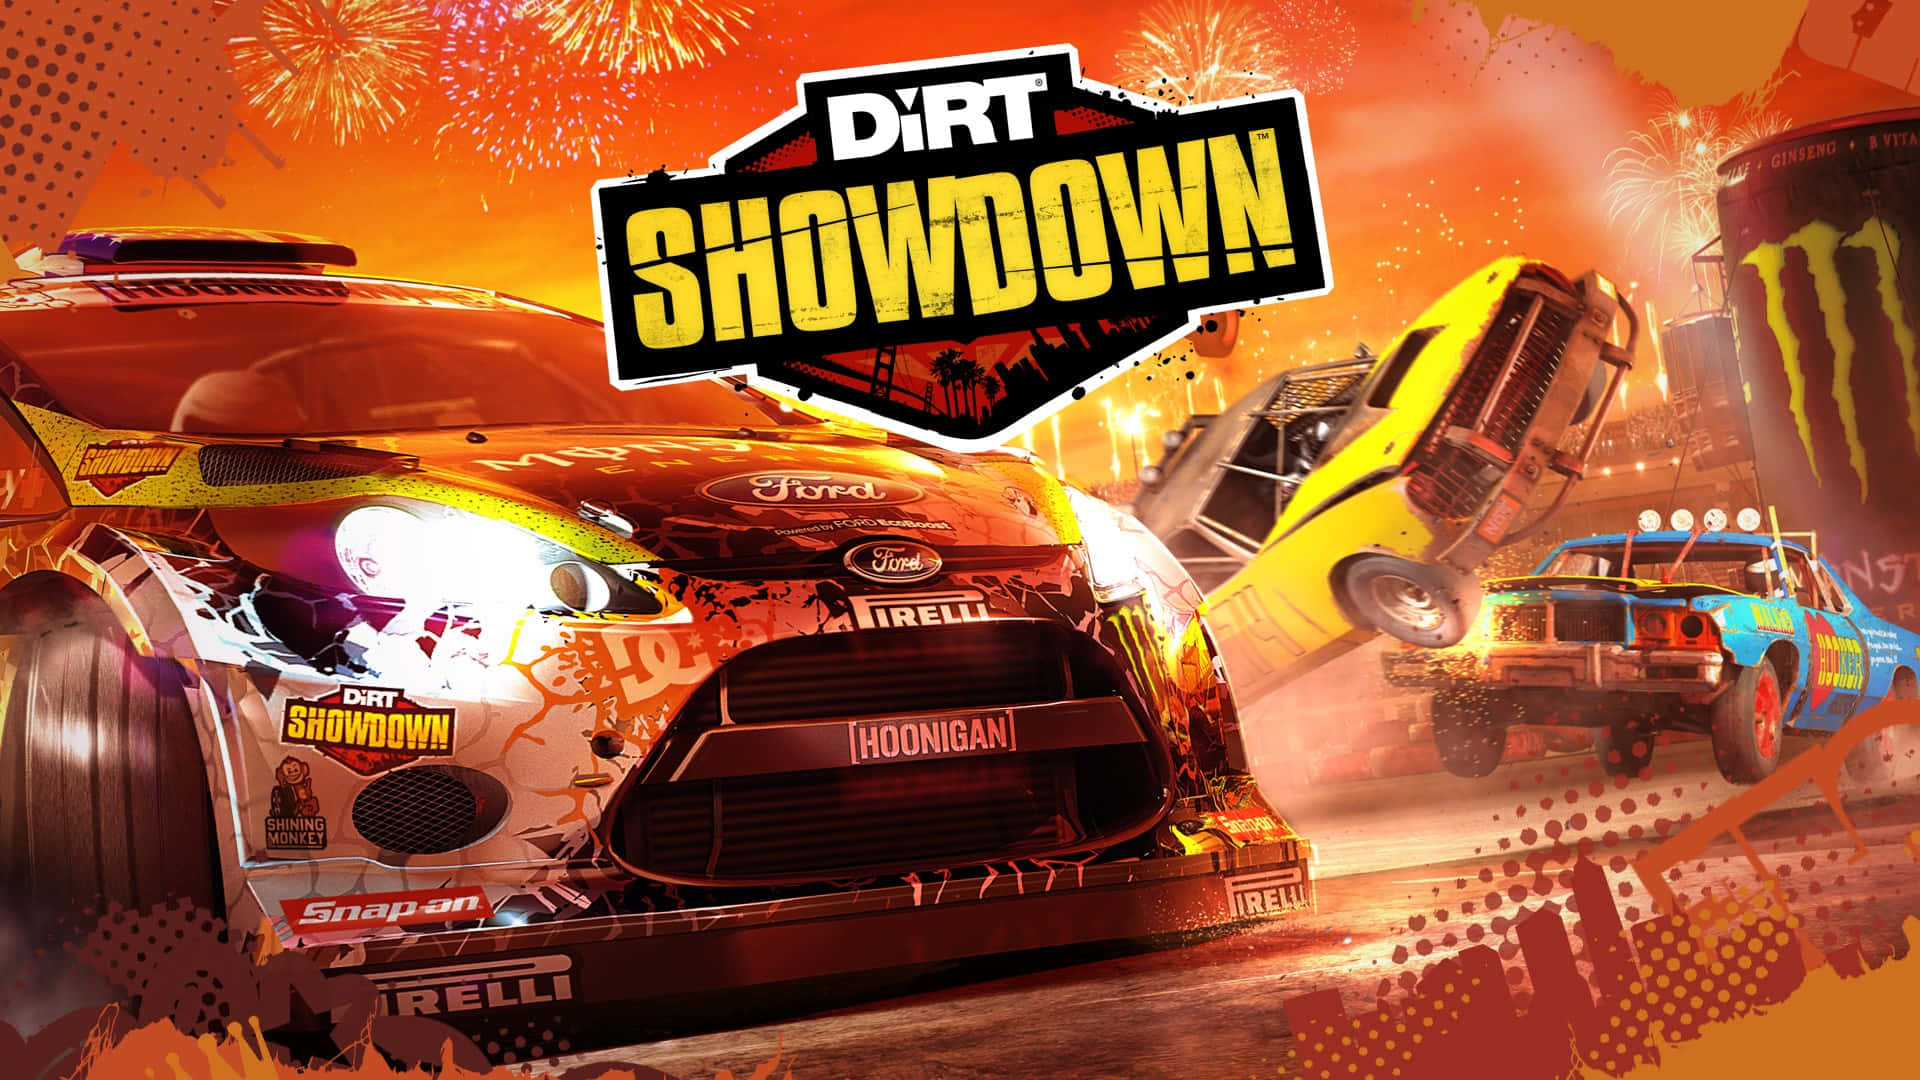 Exhilarating HD Dirt Showdown Background